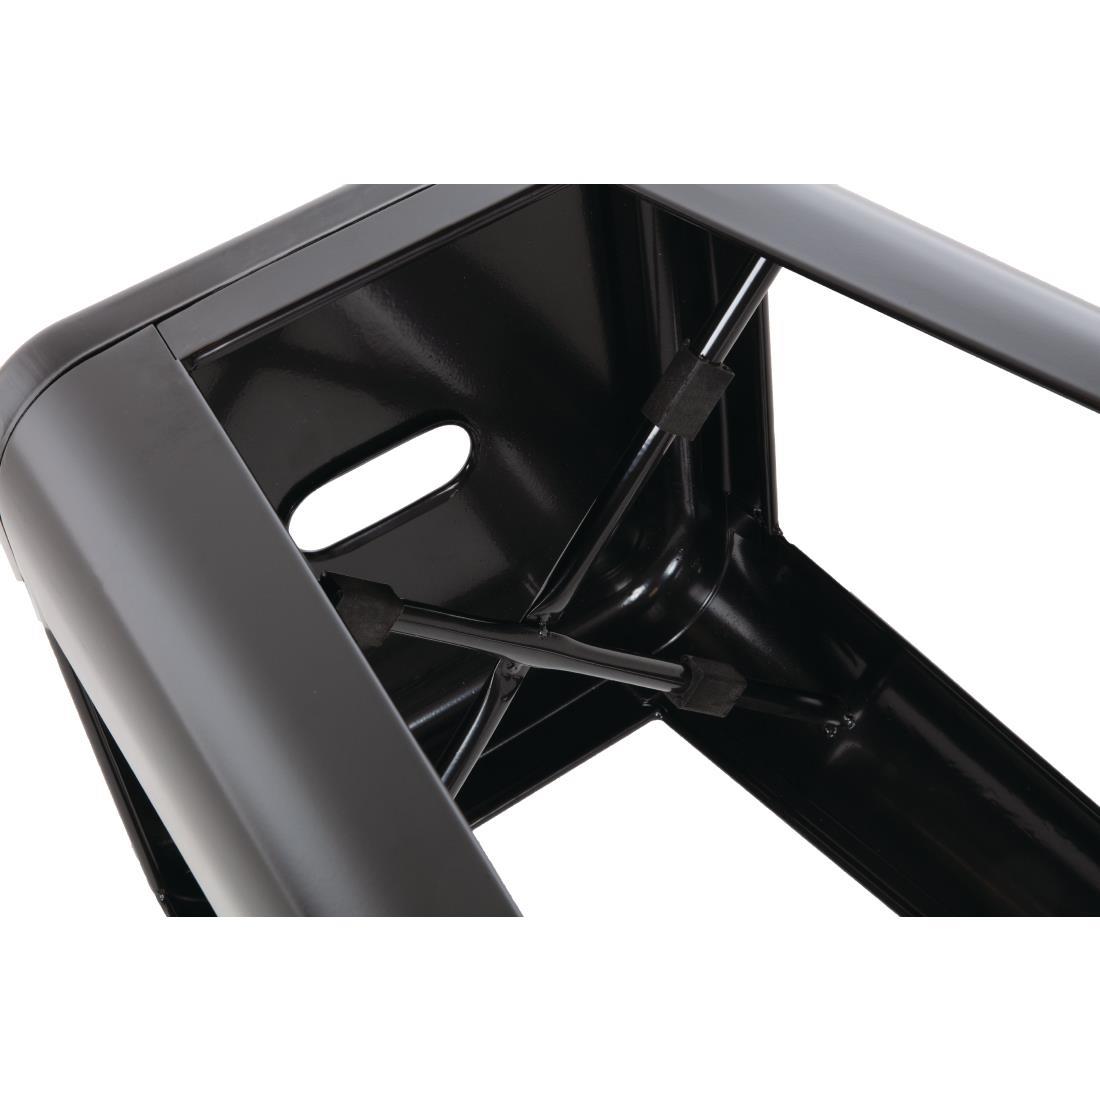 Bolero Bistro Steel High Stool Black (Pack of 4) - DL881  - 6